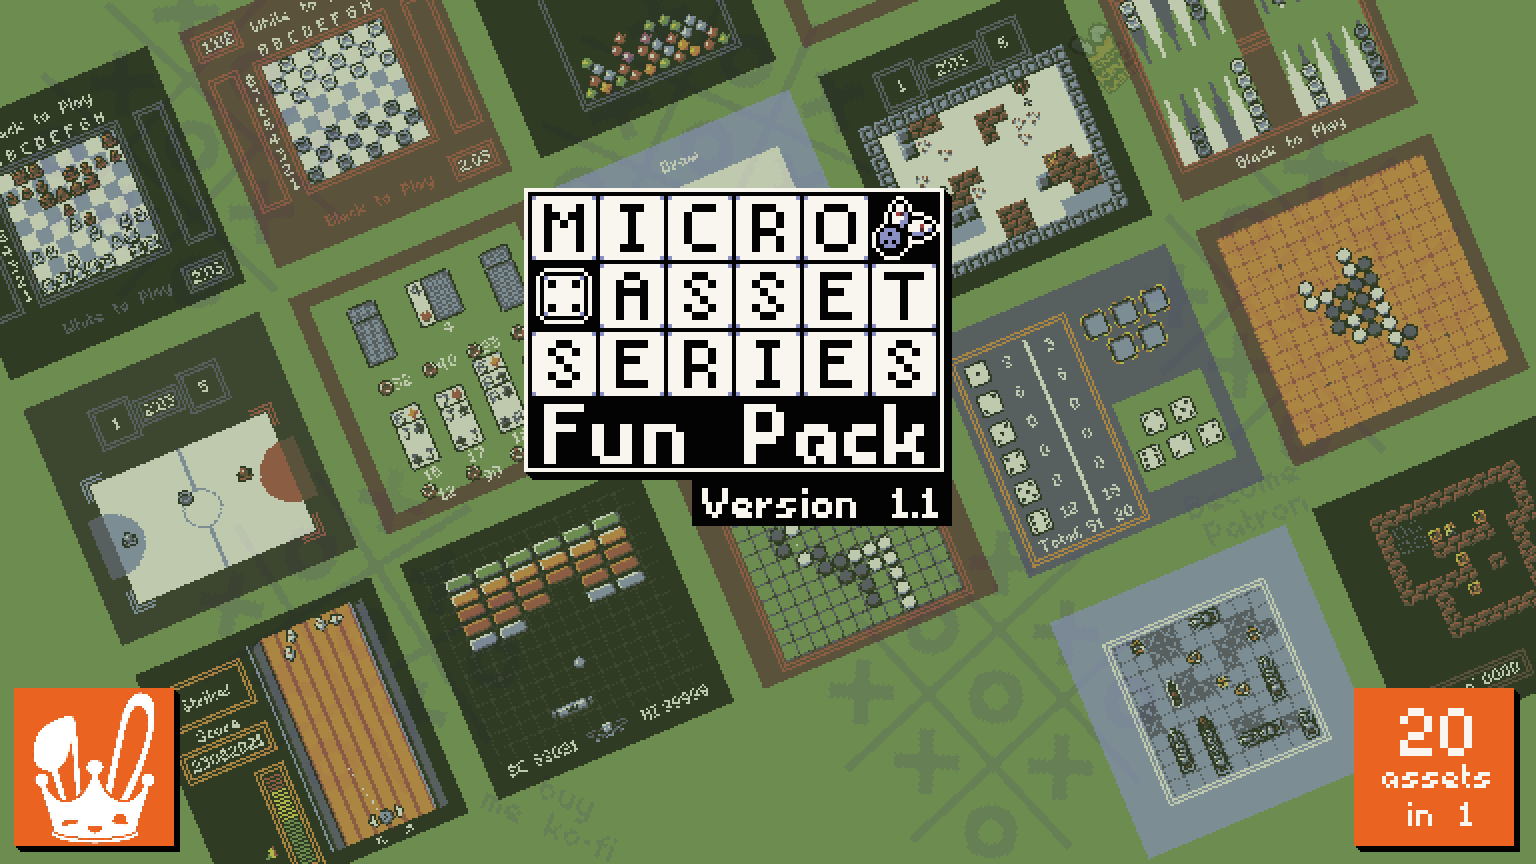 Micro Asset Series: Fun Pack